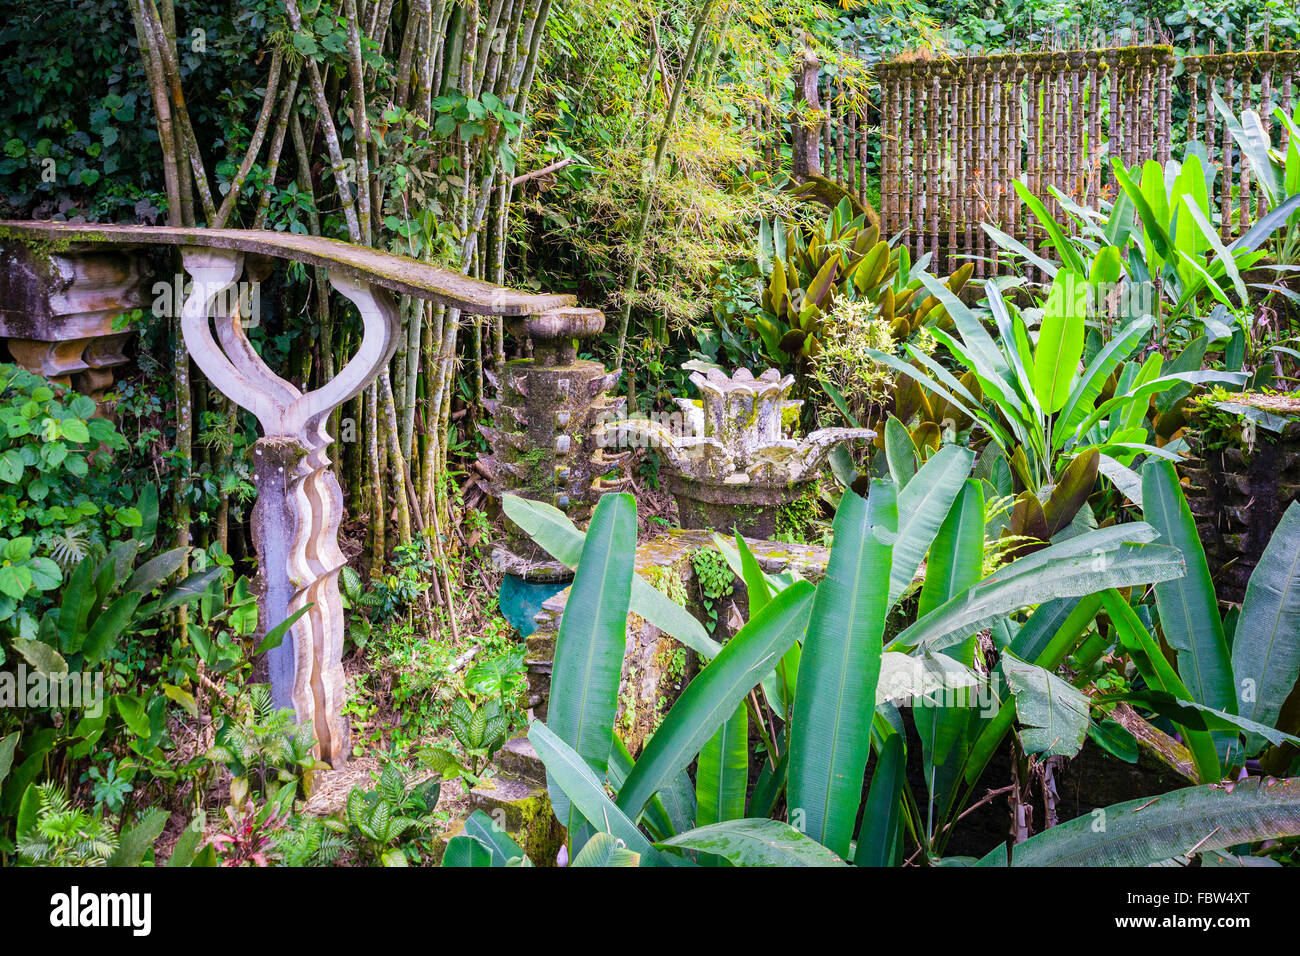 Flor de Loto and other sculptures in the surreal garden of Las Pozas near Xilitla, Mexico. Stock Photo